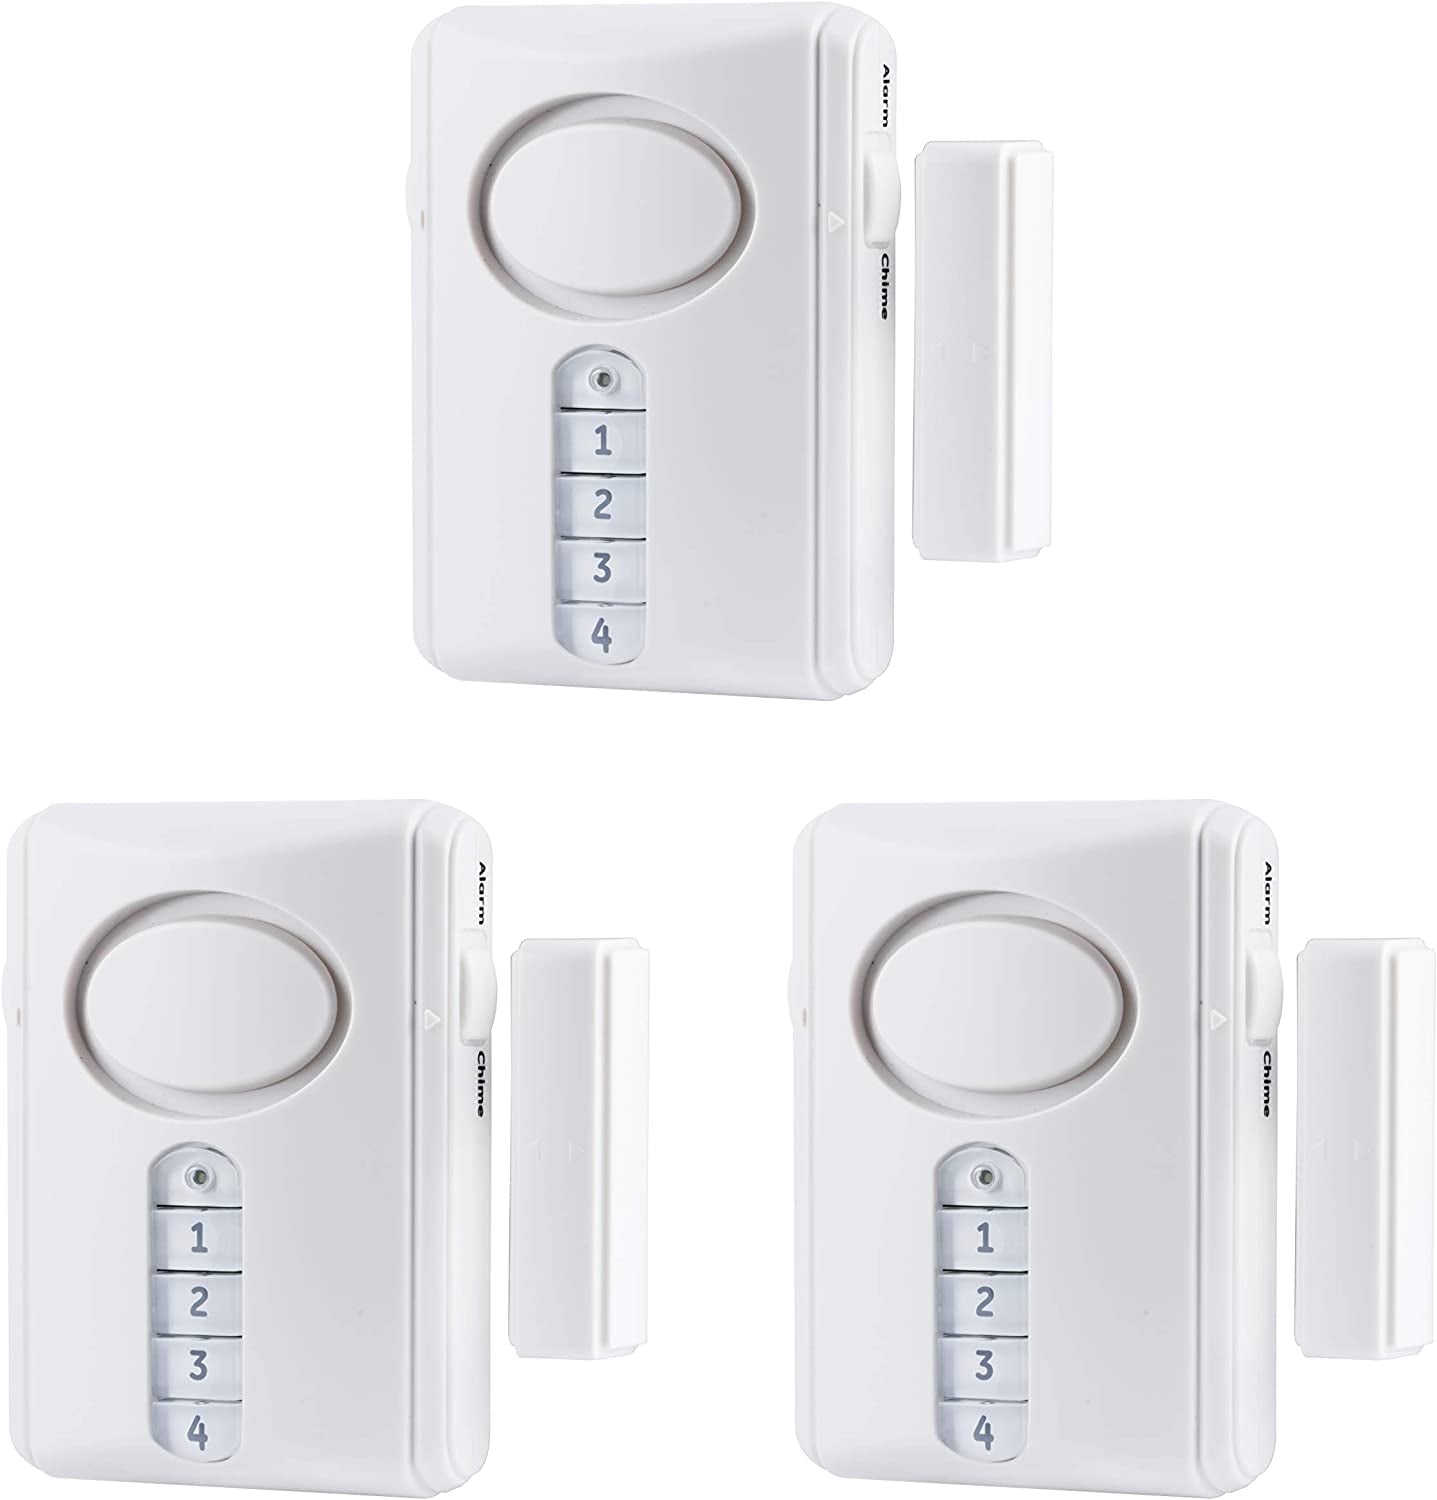 GE, GE Deluxe Wireless Door, 3-Pack, 120 Decibel, Alarm or Entry Chime, Indoor Personal Security, with Keypad Activation, 45990, 3 Piece